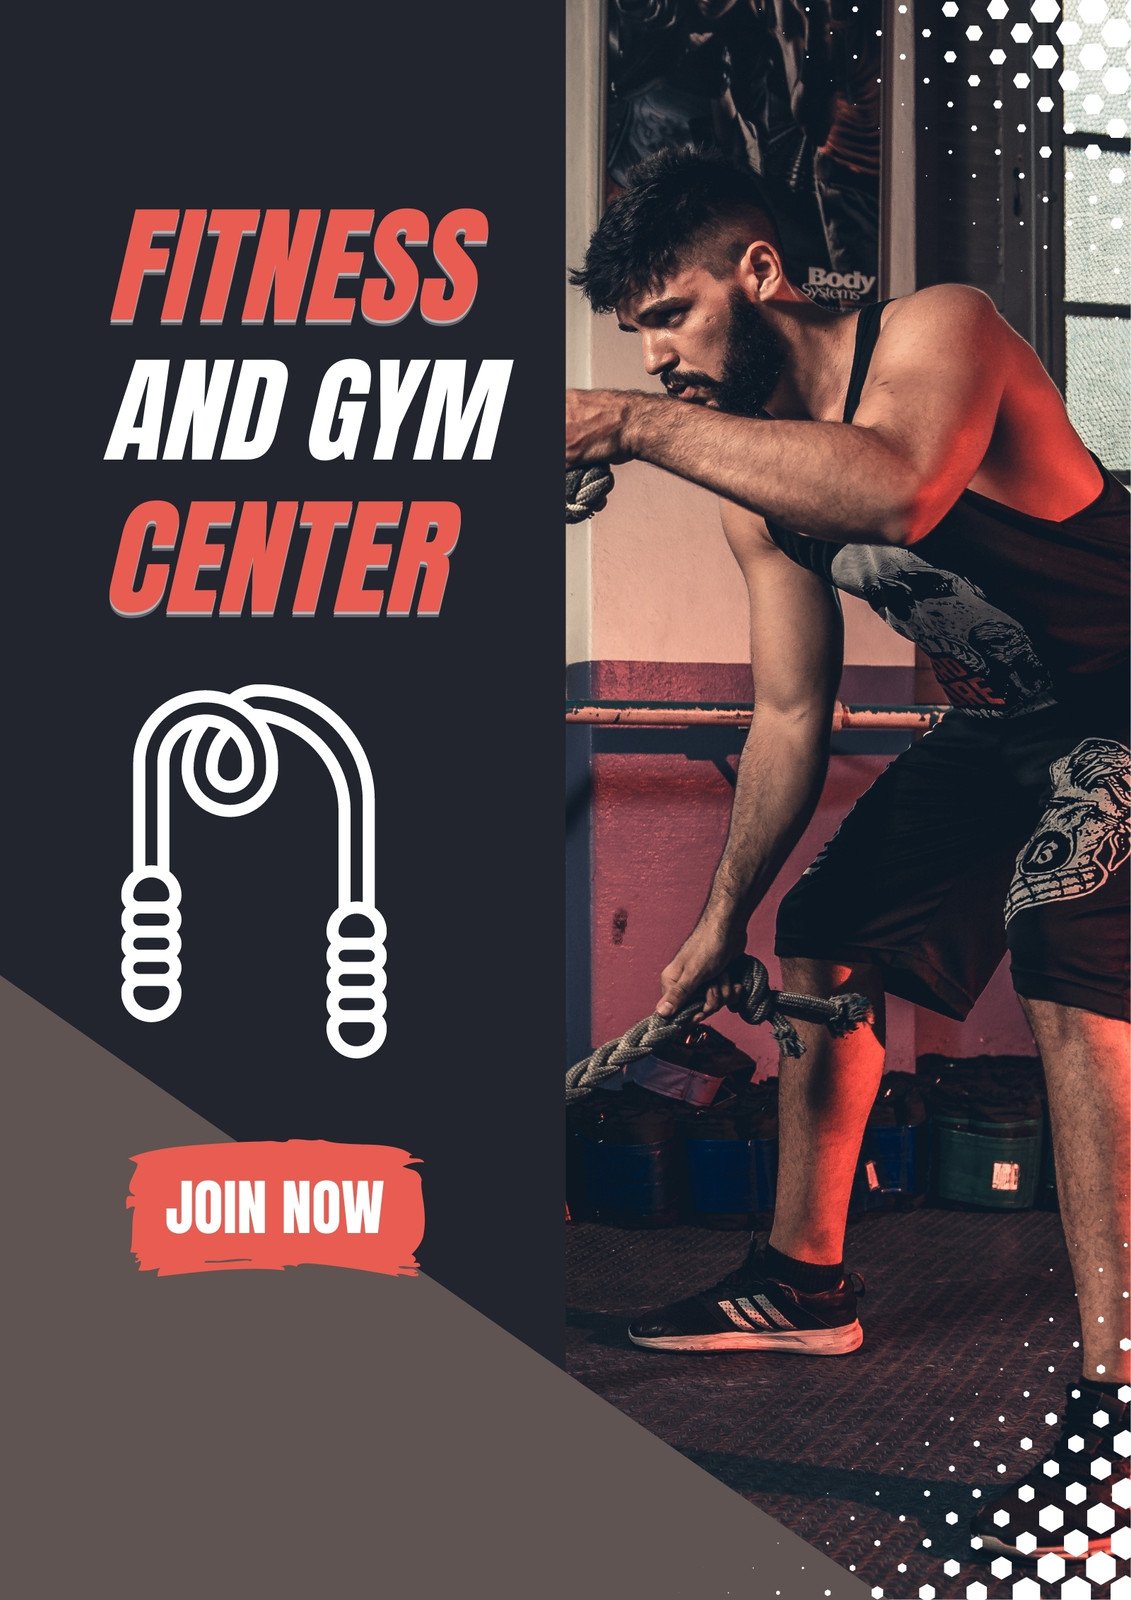 Free printable and customizable gym poster templates